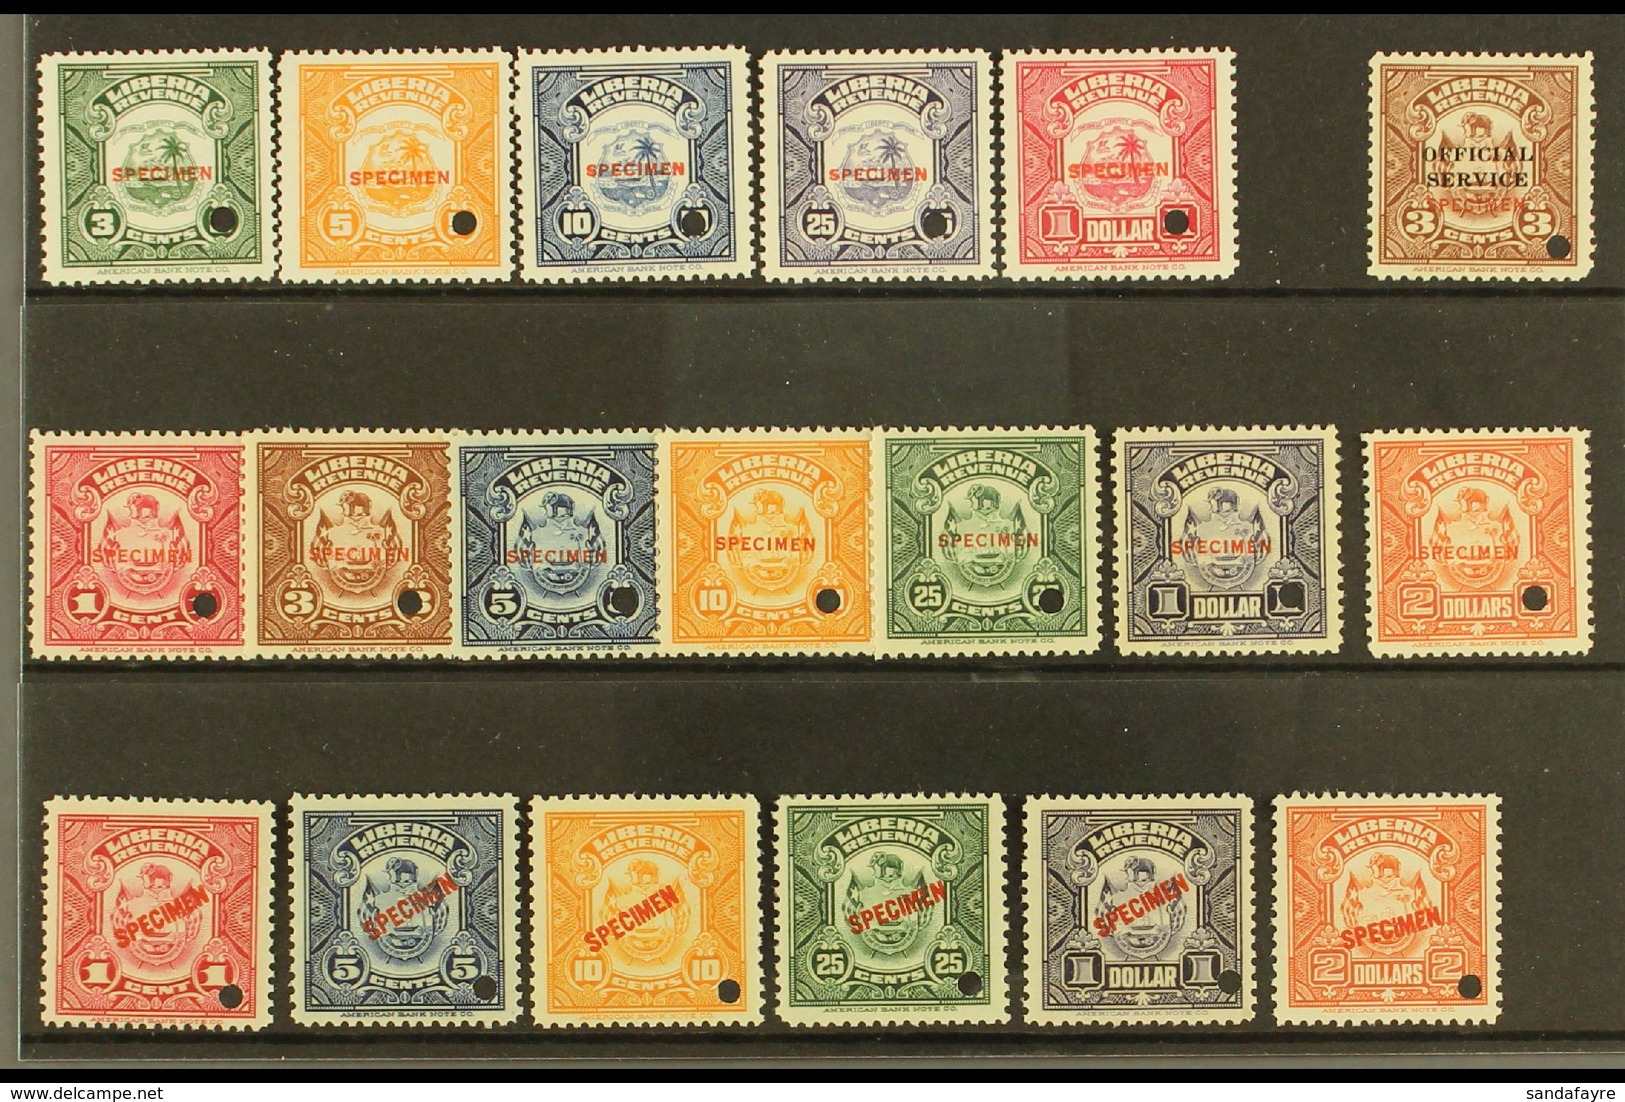 REVENUE - "SPECIMENS" 1928 NEVER HINGED America Bank Note Company Archive Revenues With Red "SPECIMEN" Overprints, Inclu - Liberia